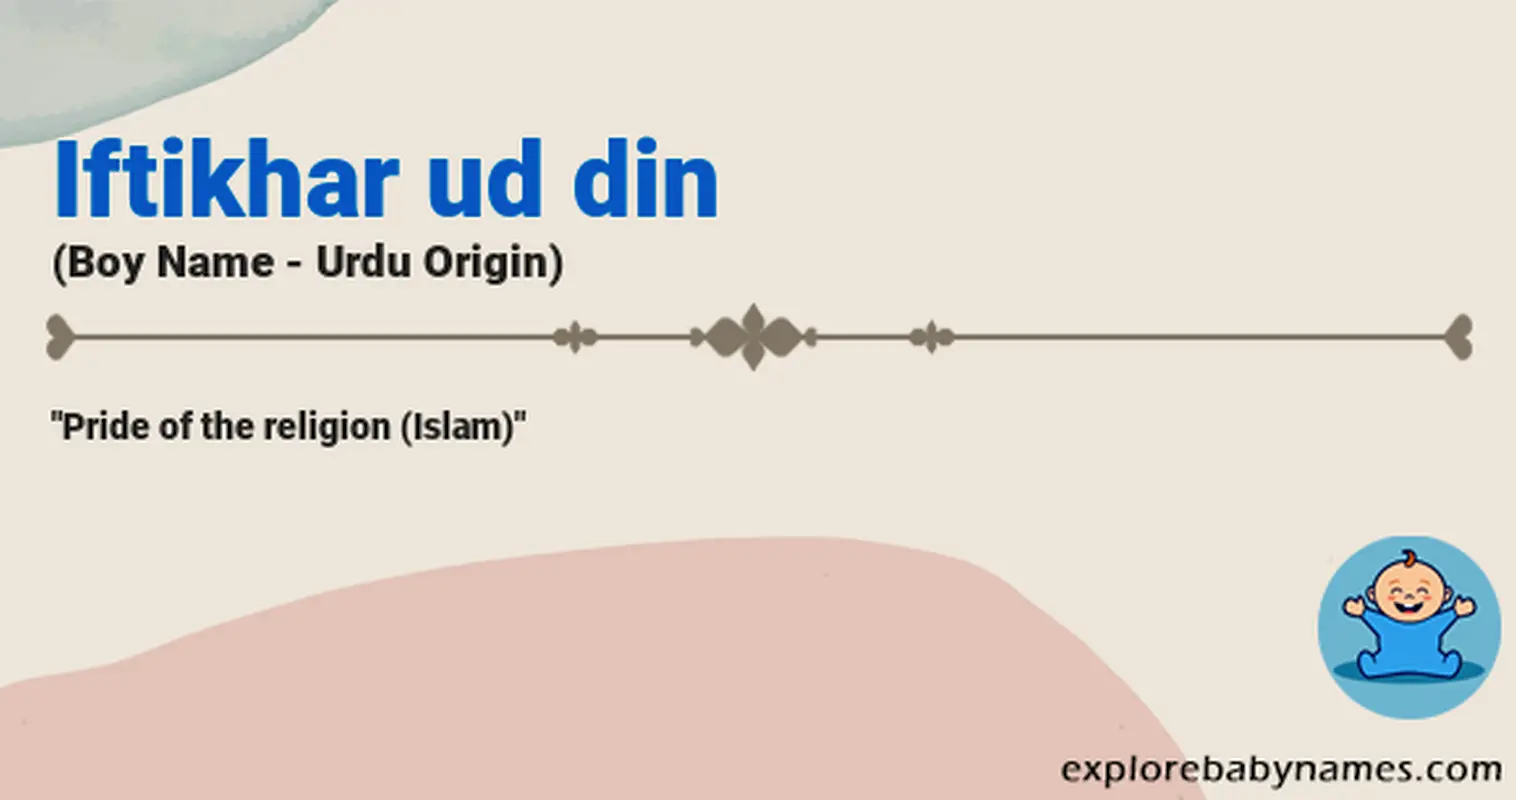 Meaning of Iftikhar ud din